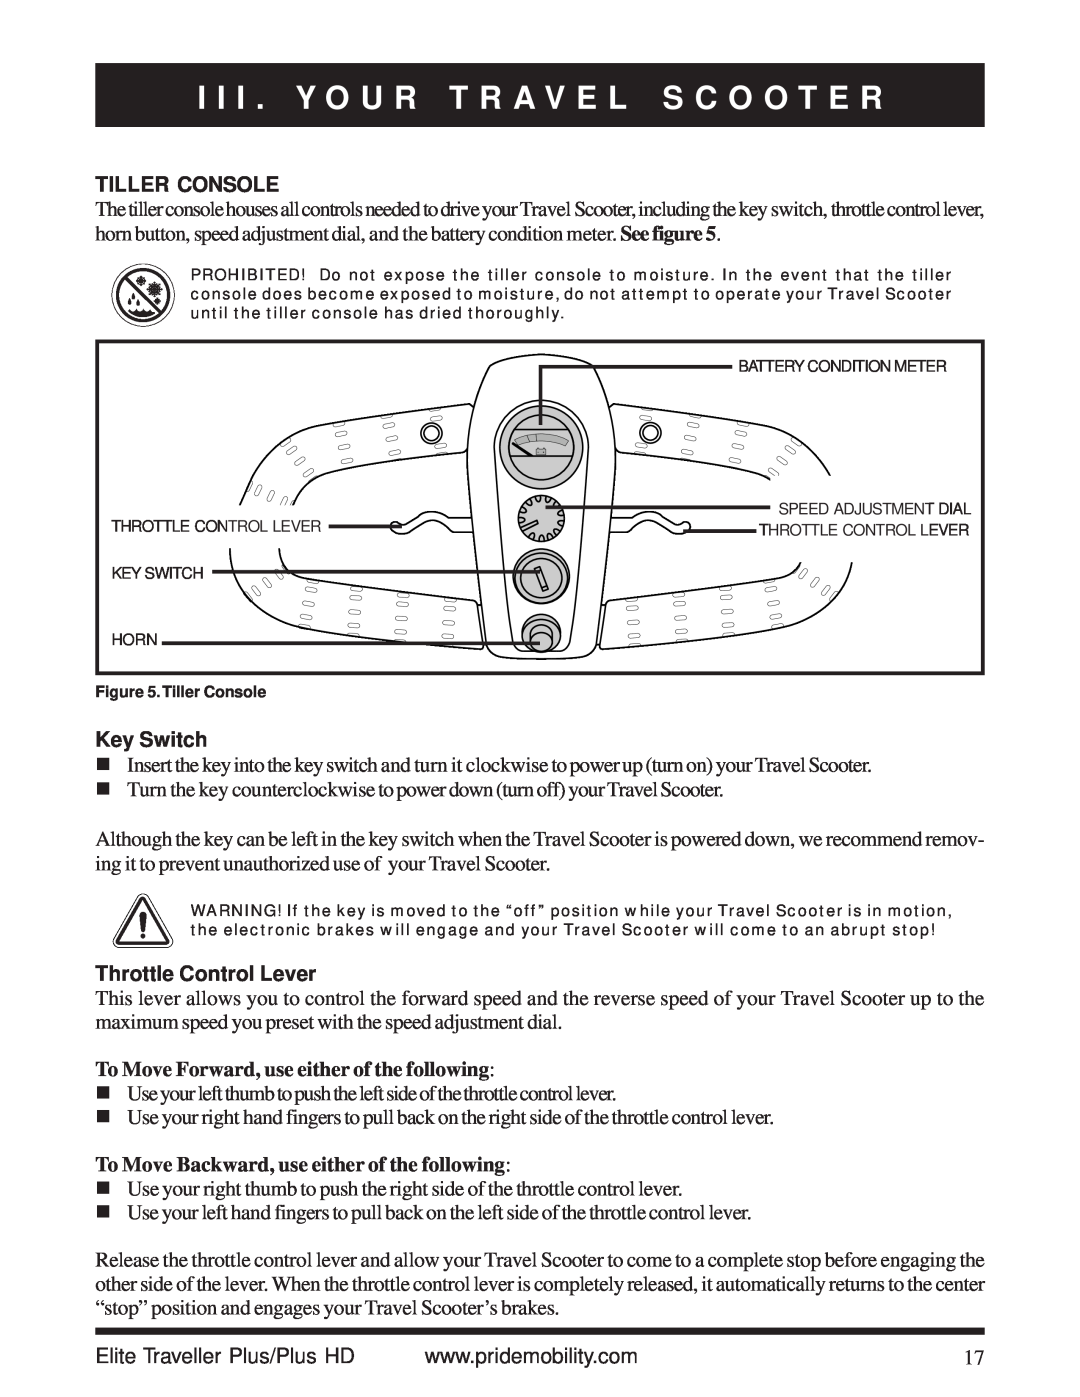 Pride Mobility Traveller Plus HD manual I I I . Y O U R T R A V E L S C O O T E R, Tiller Console, Key Switch 